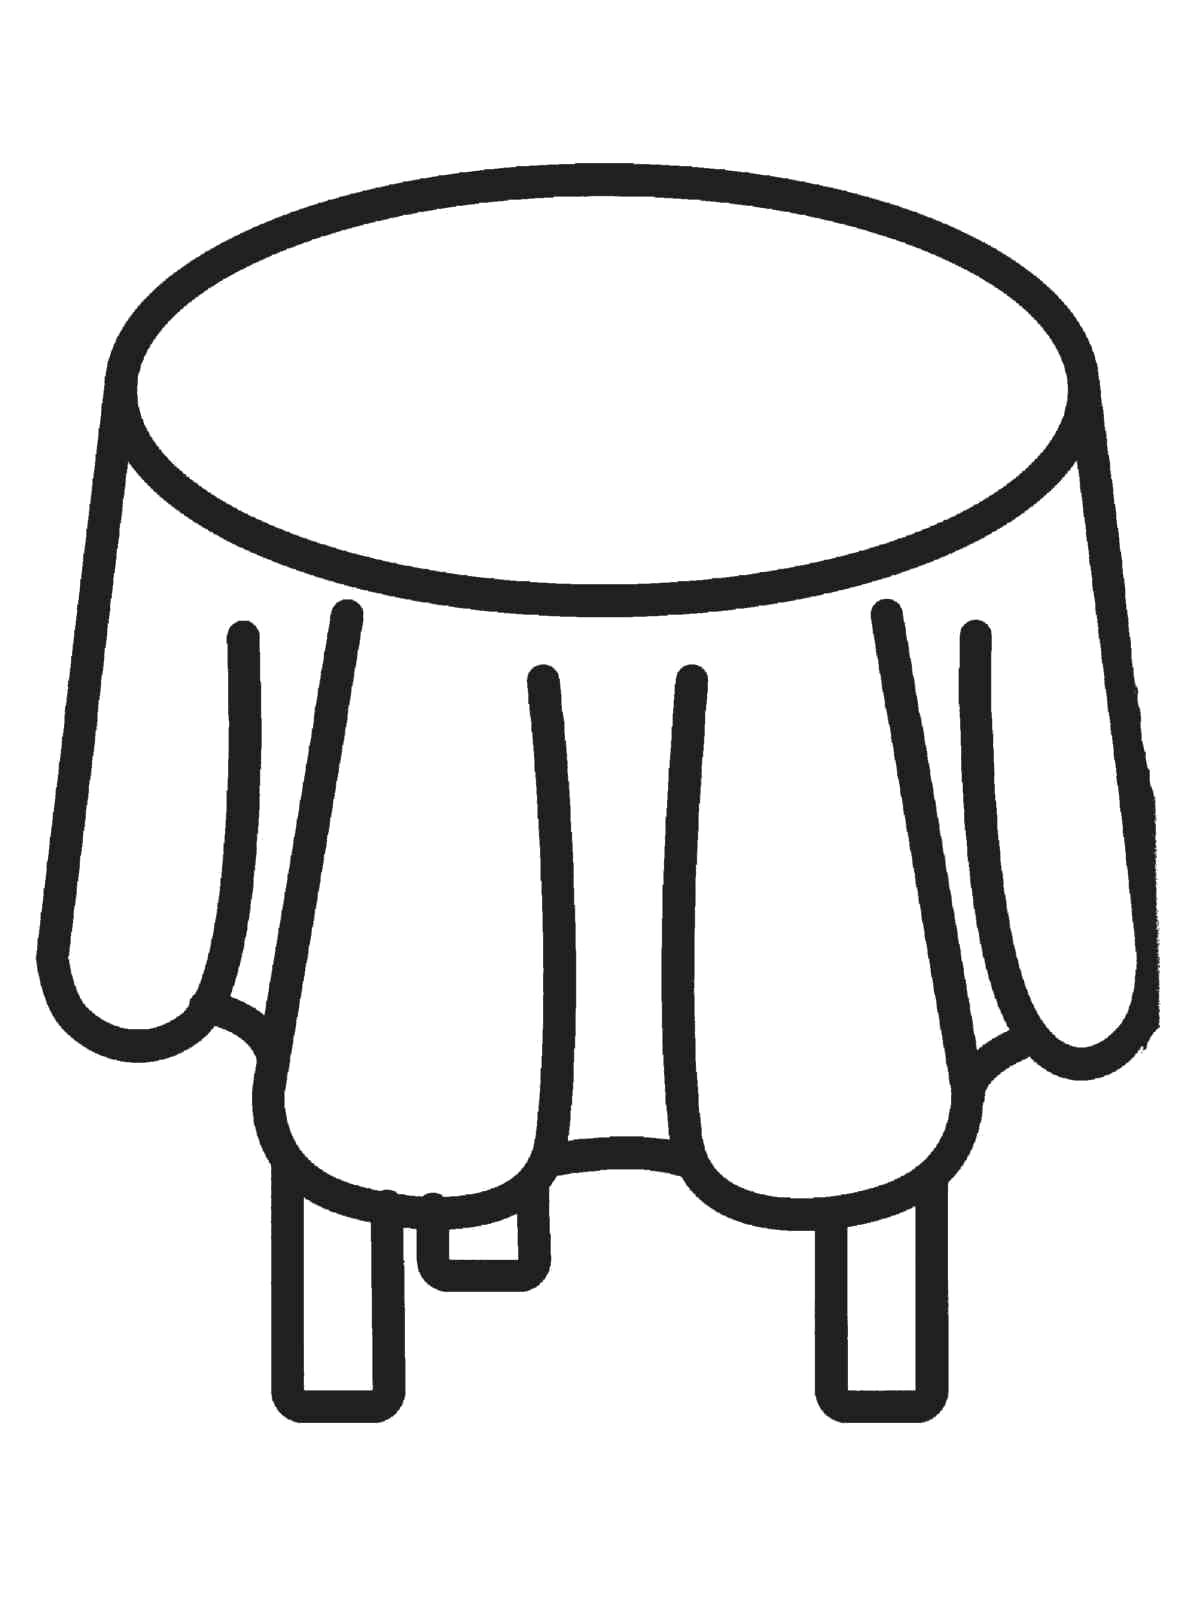 Название: Раскраска стол, раскраска. Категория: Стол. Теги: Стол.